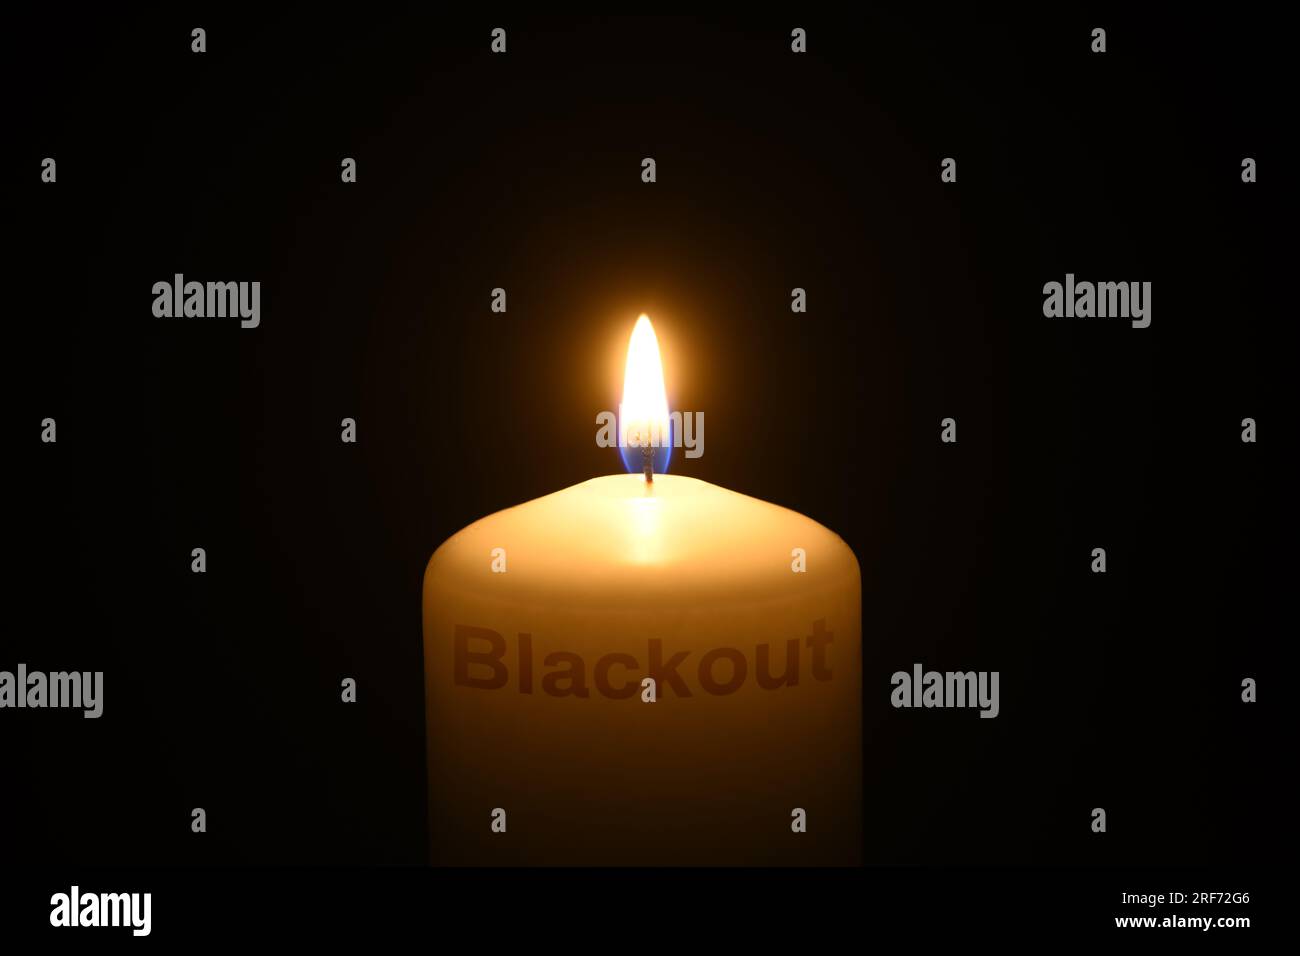 FOTOMONTAGE, Brennende Kerze mit Schriftzug Blackout Foto Stock